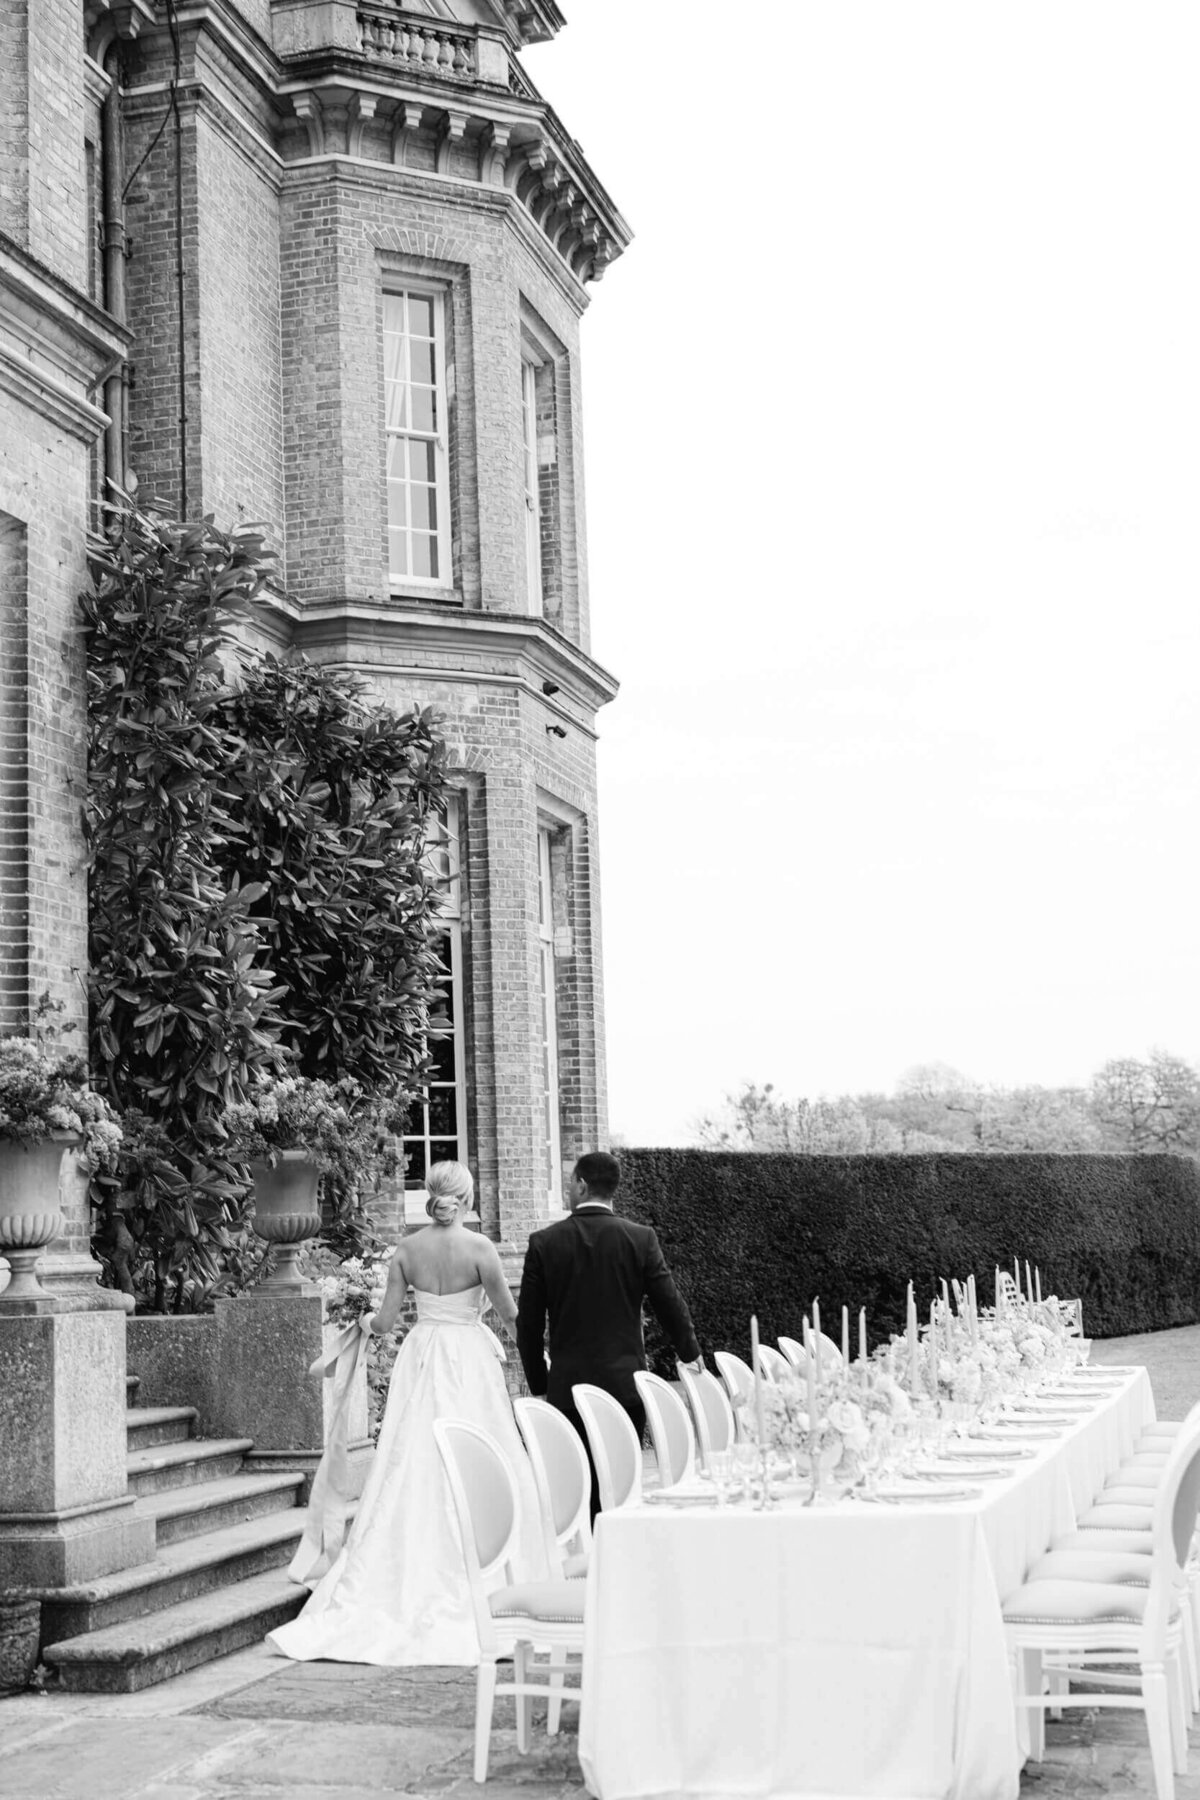 Jayce-Keil-Photo-Film-london-paris-ireland-wedding-photography-85